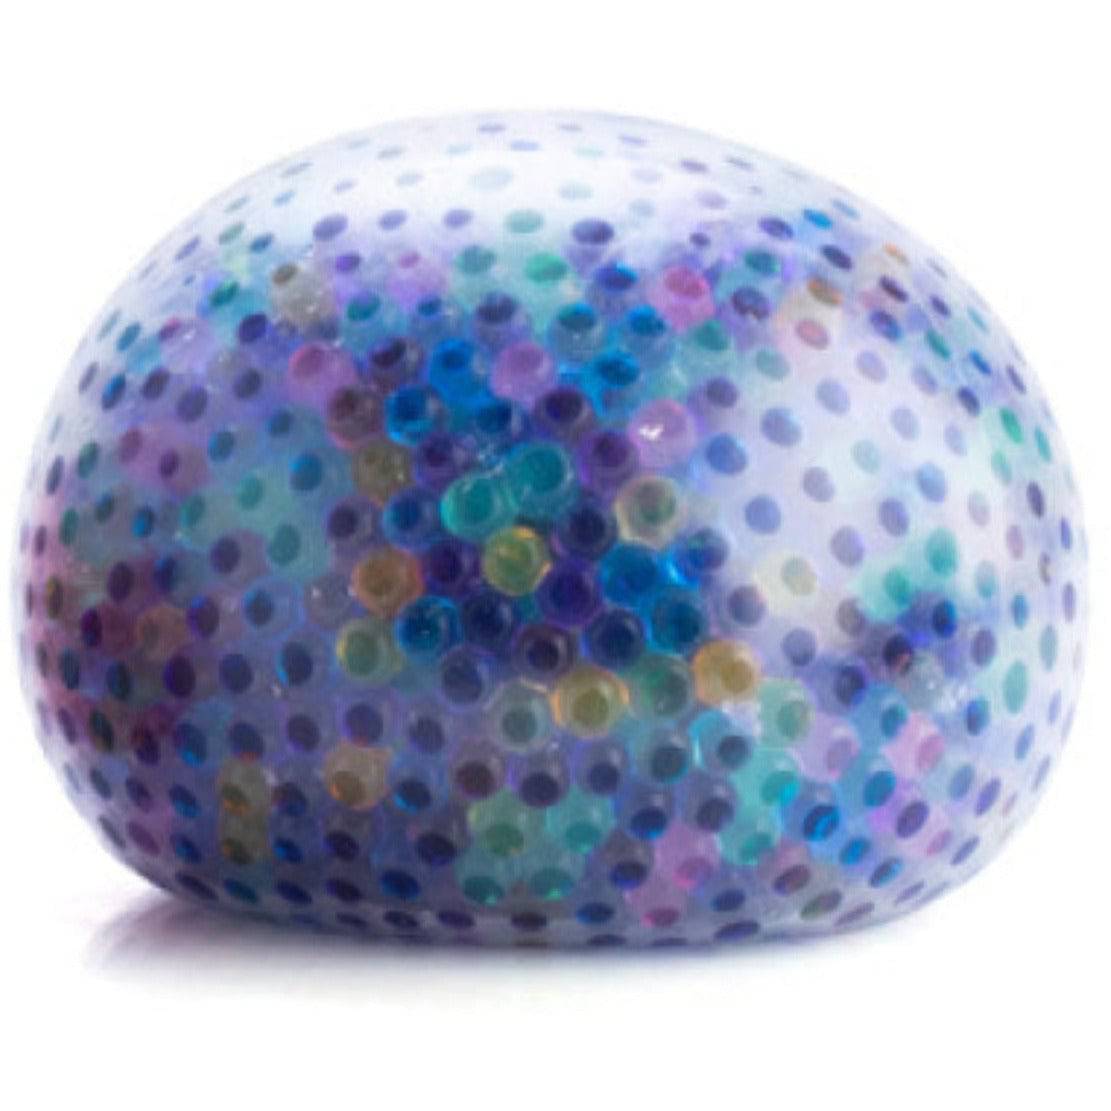 Smoosho's Jumbo Gel Bead Ball - Sensory Circle